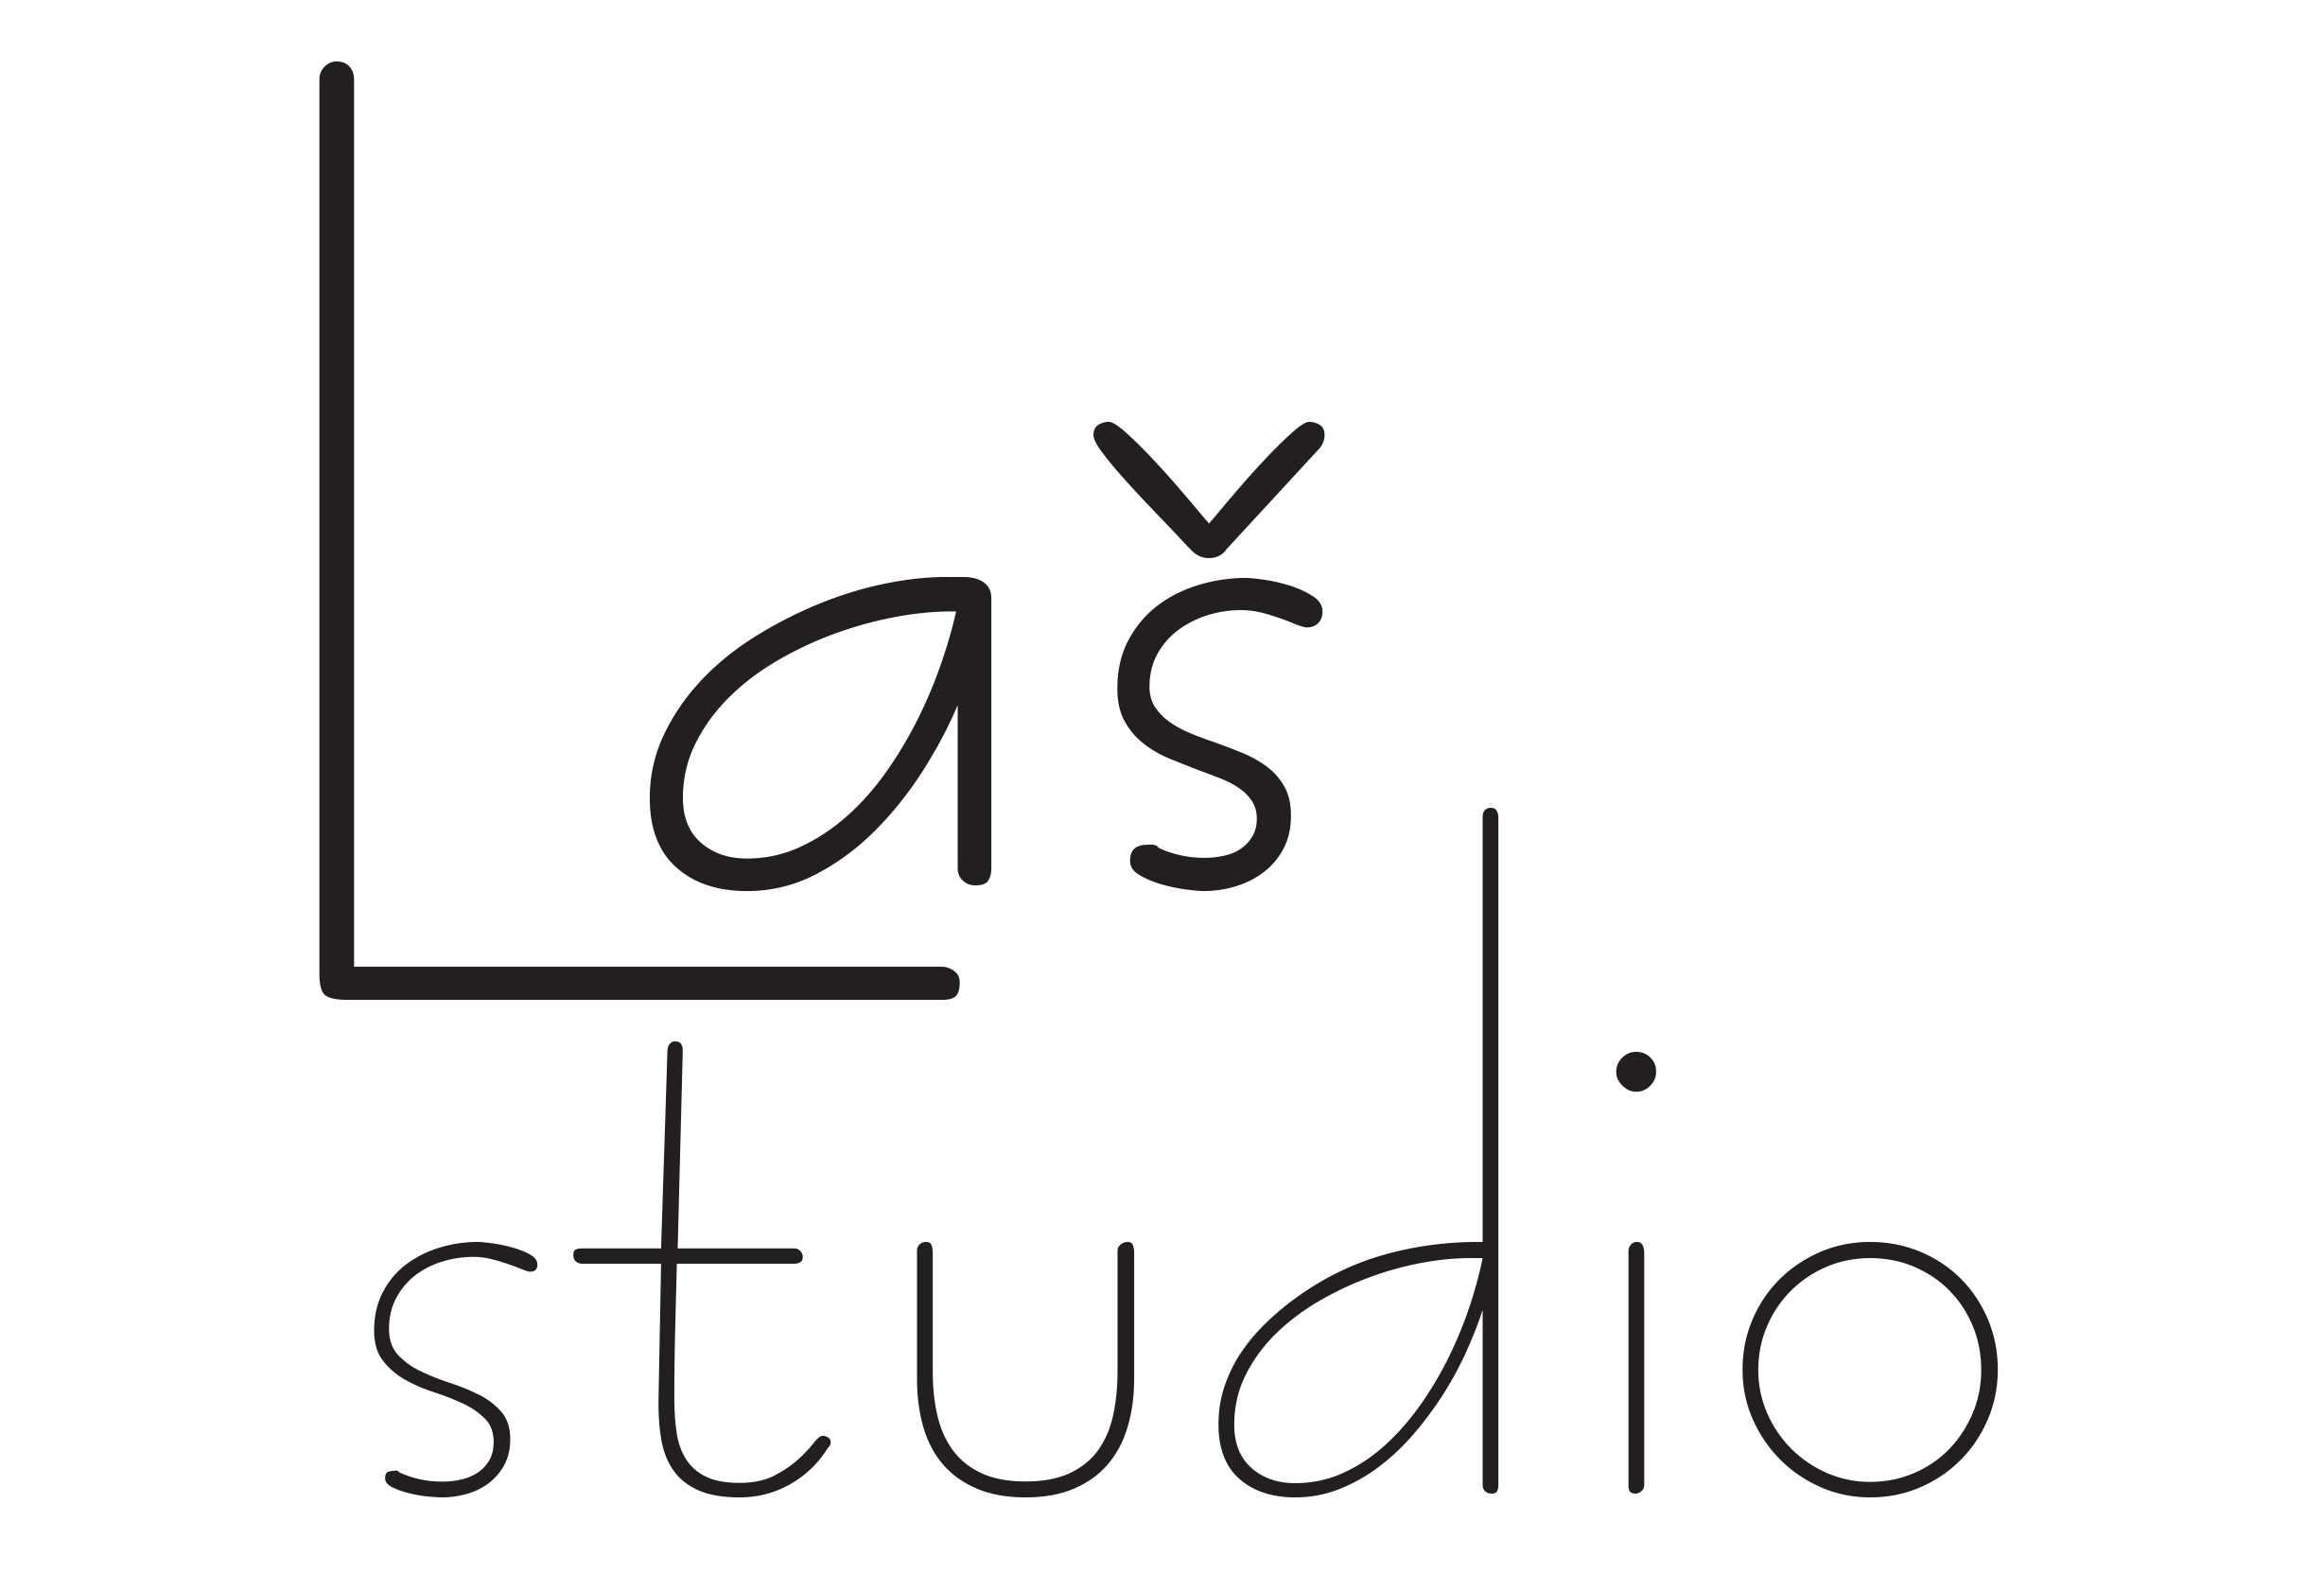 Laš Studio 